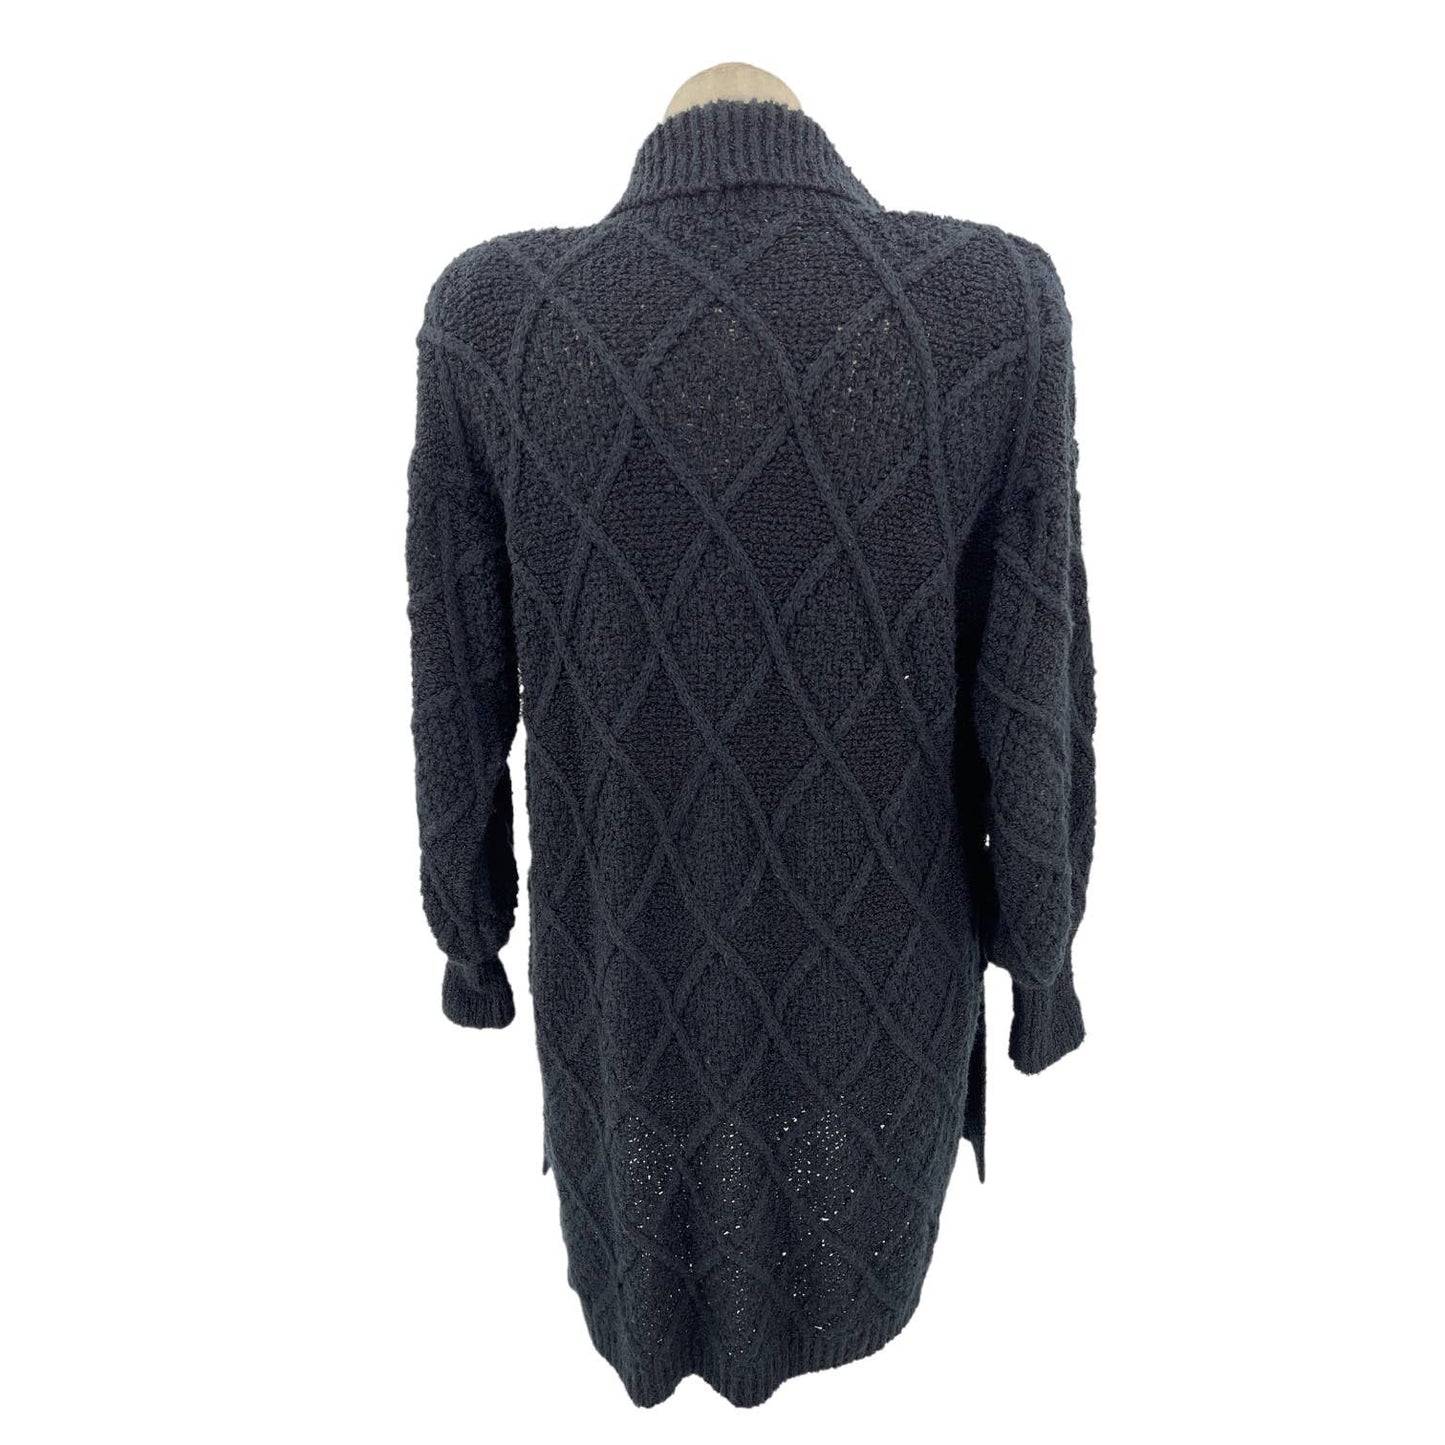 Vintage 80s Black Cardigan Sweater Textured Diamond Pattern Yarn Works Size S